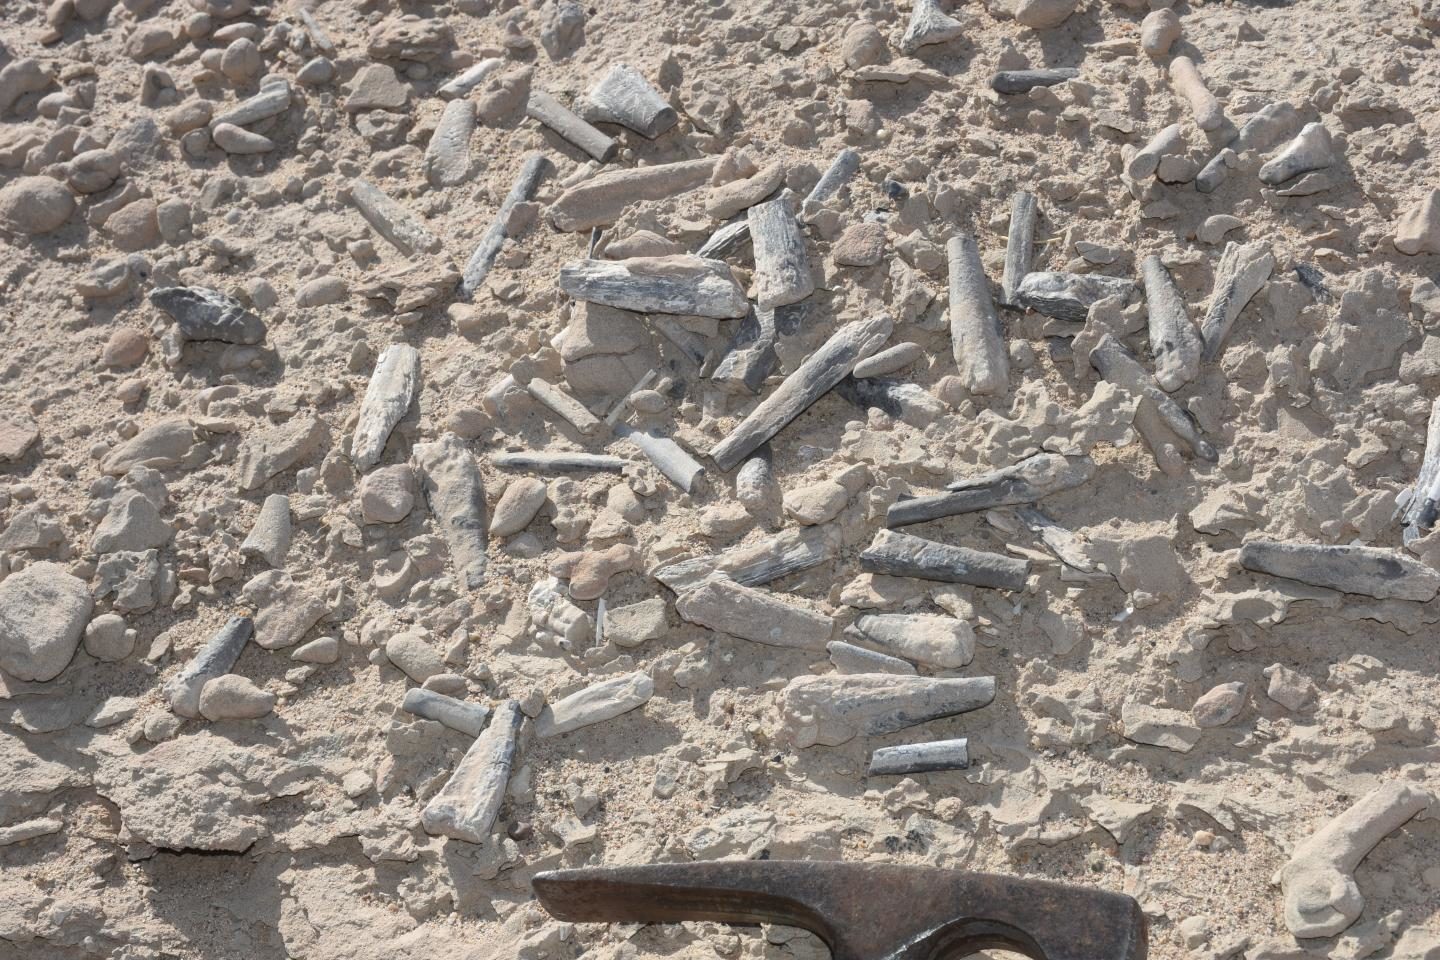 Hundreds of pterosaur bones on the surface, demonstrating the richness of these sites. Alexander Kellner (Museu Nacional/UFRJ)